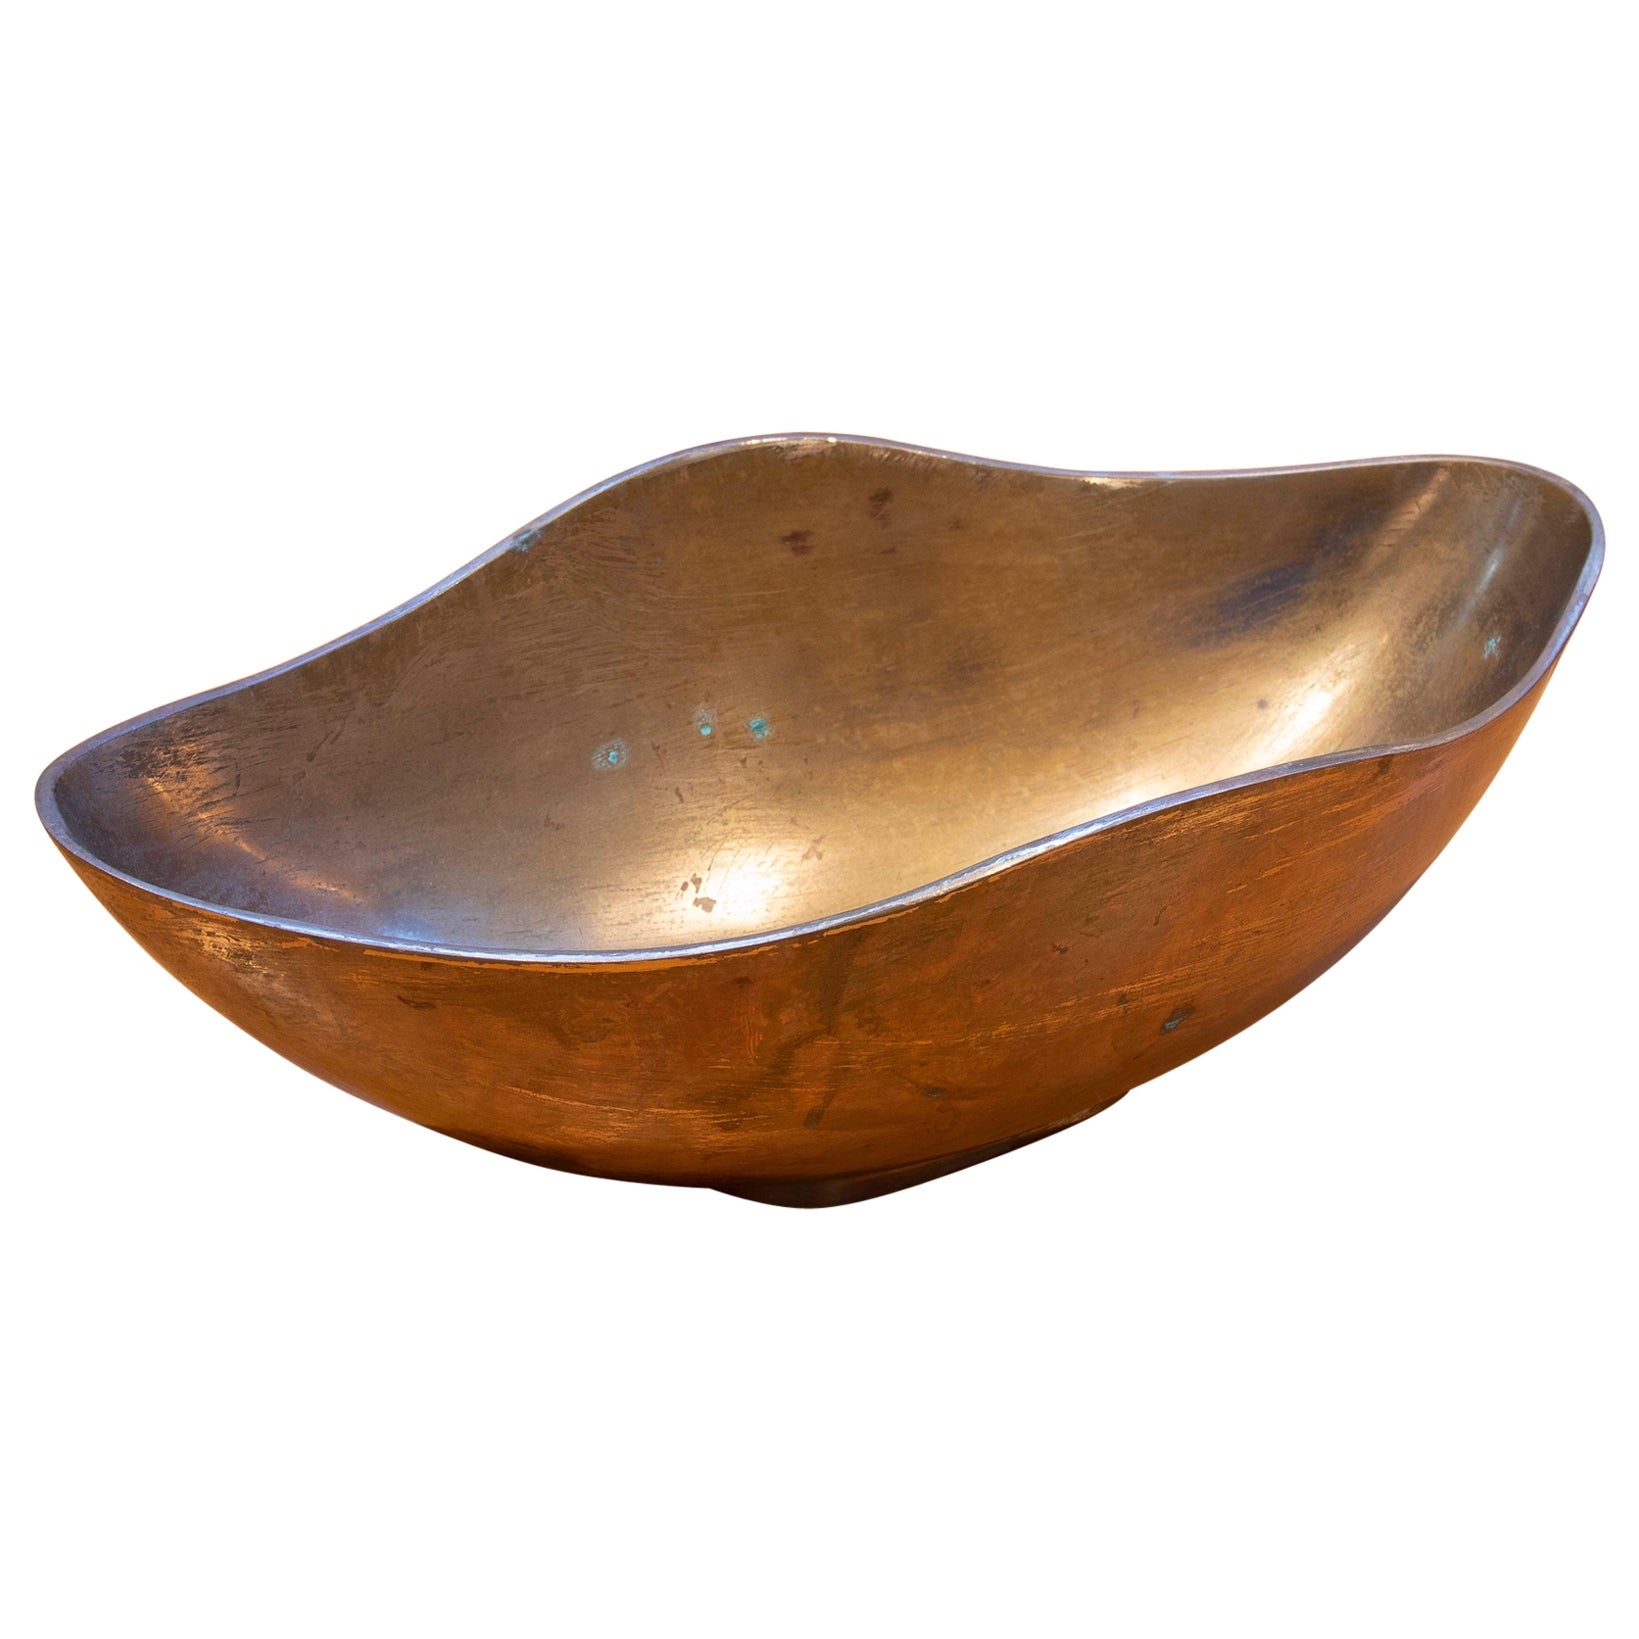 Esa Fedrigolli Sculptural Bowl in Solid Sand Cast Bronze. Signed